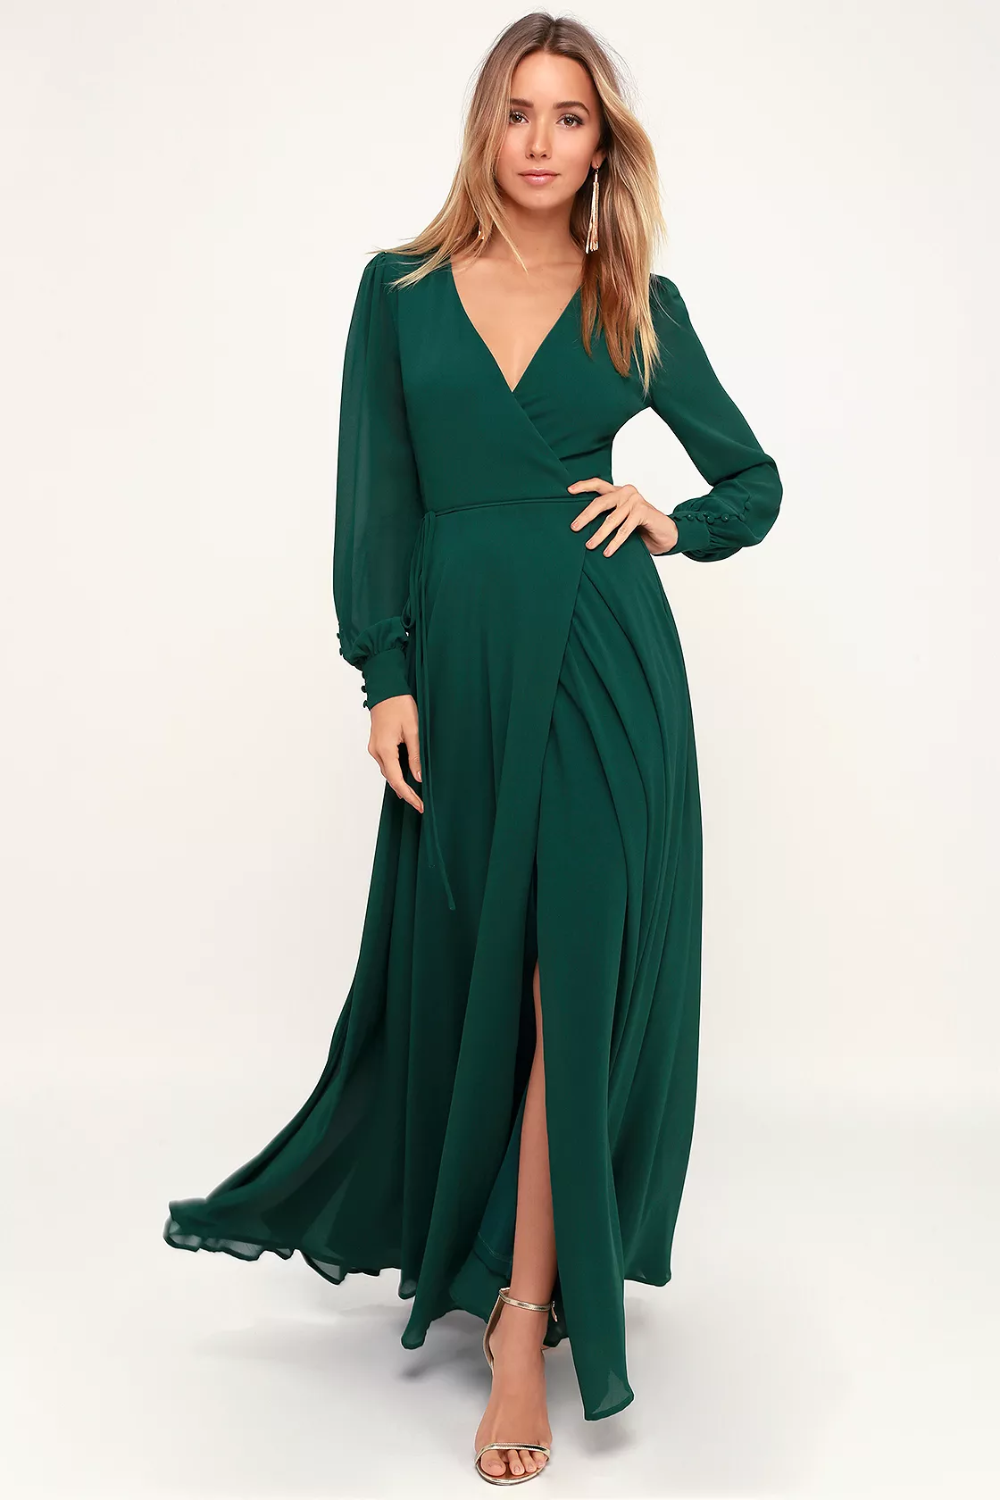 dark-green-dress. 60+ Most Fashionable Semi Formal Wedding Dresses for Female Guests